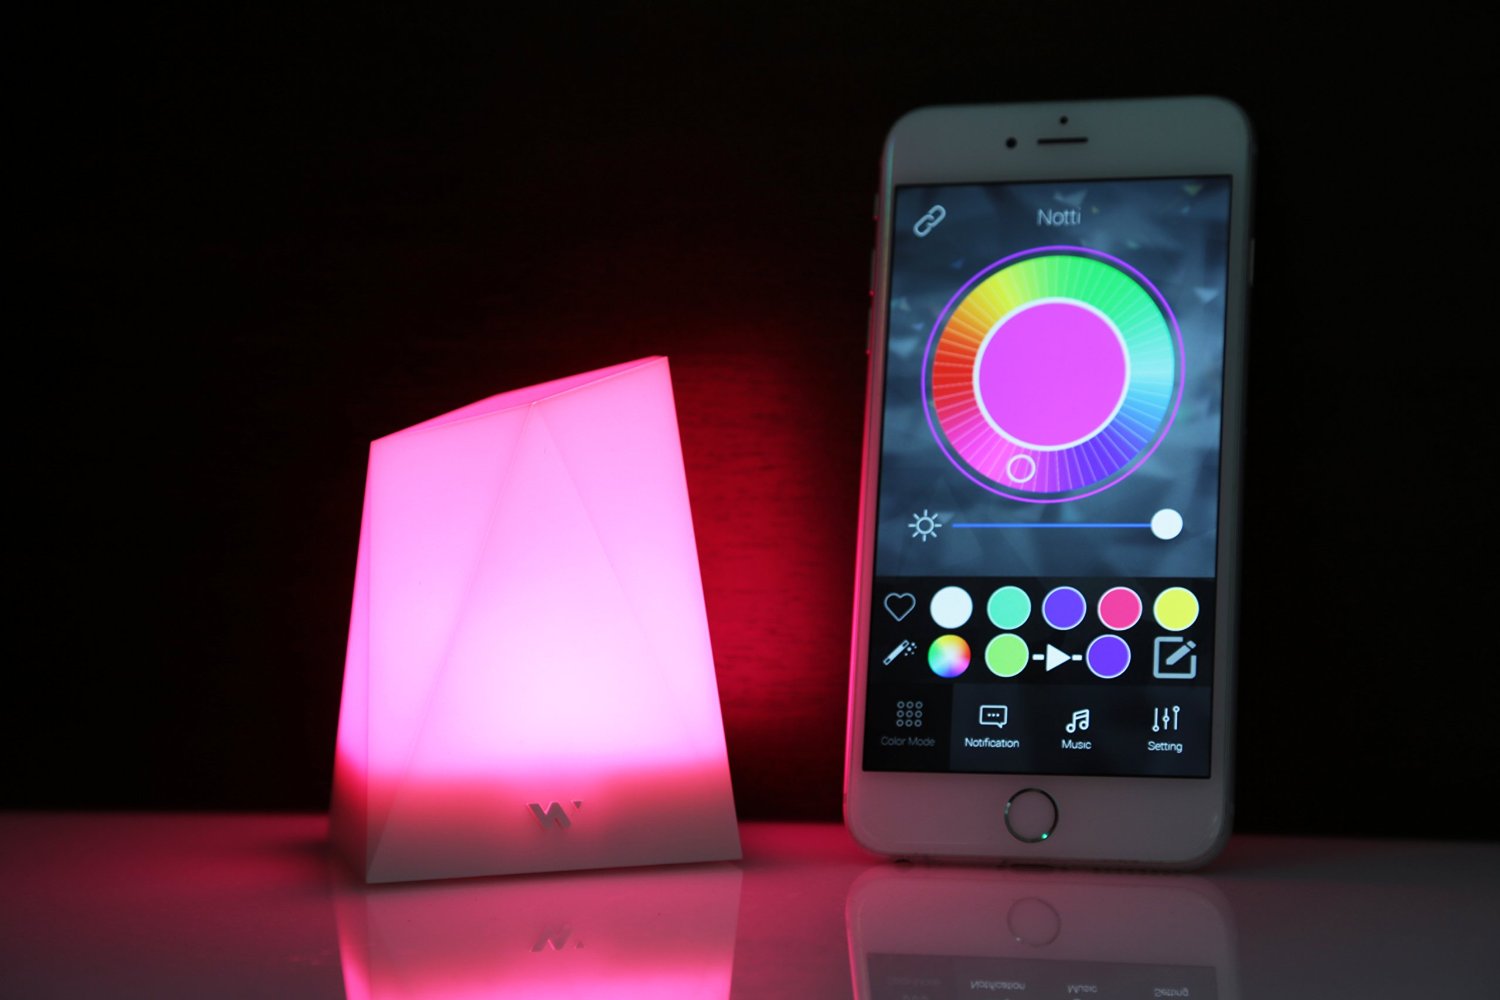 LED Smart Mood Light & Night Light